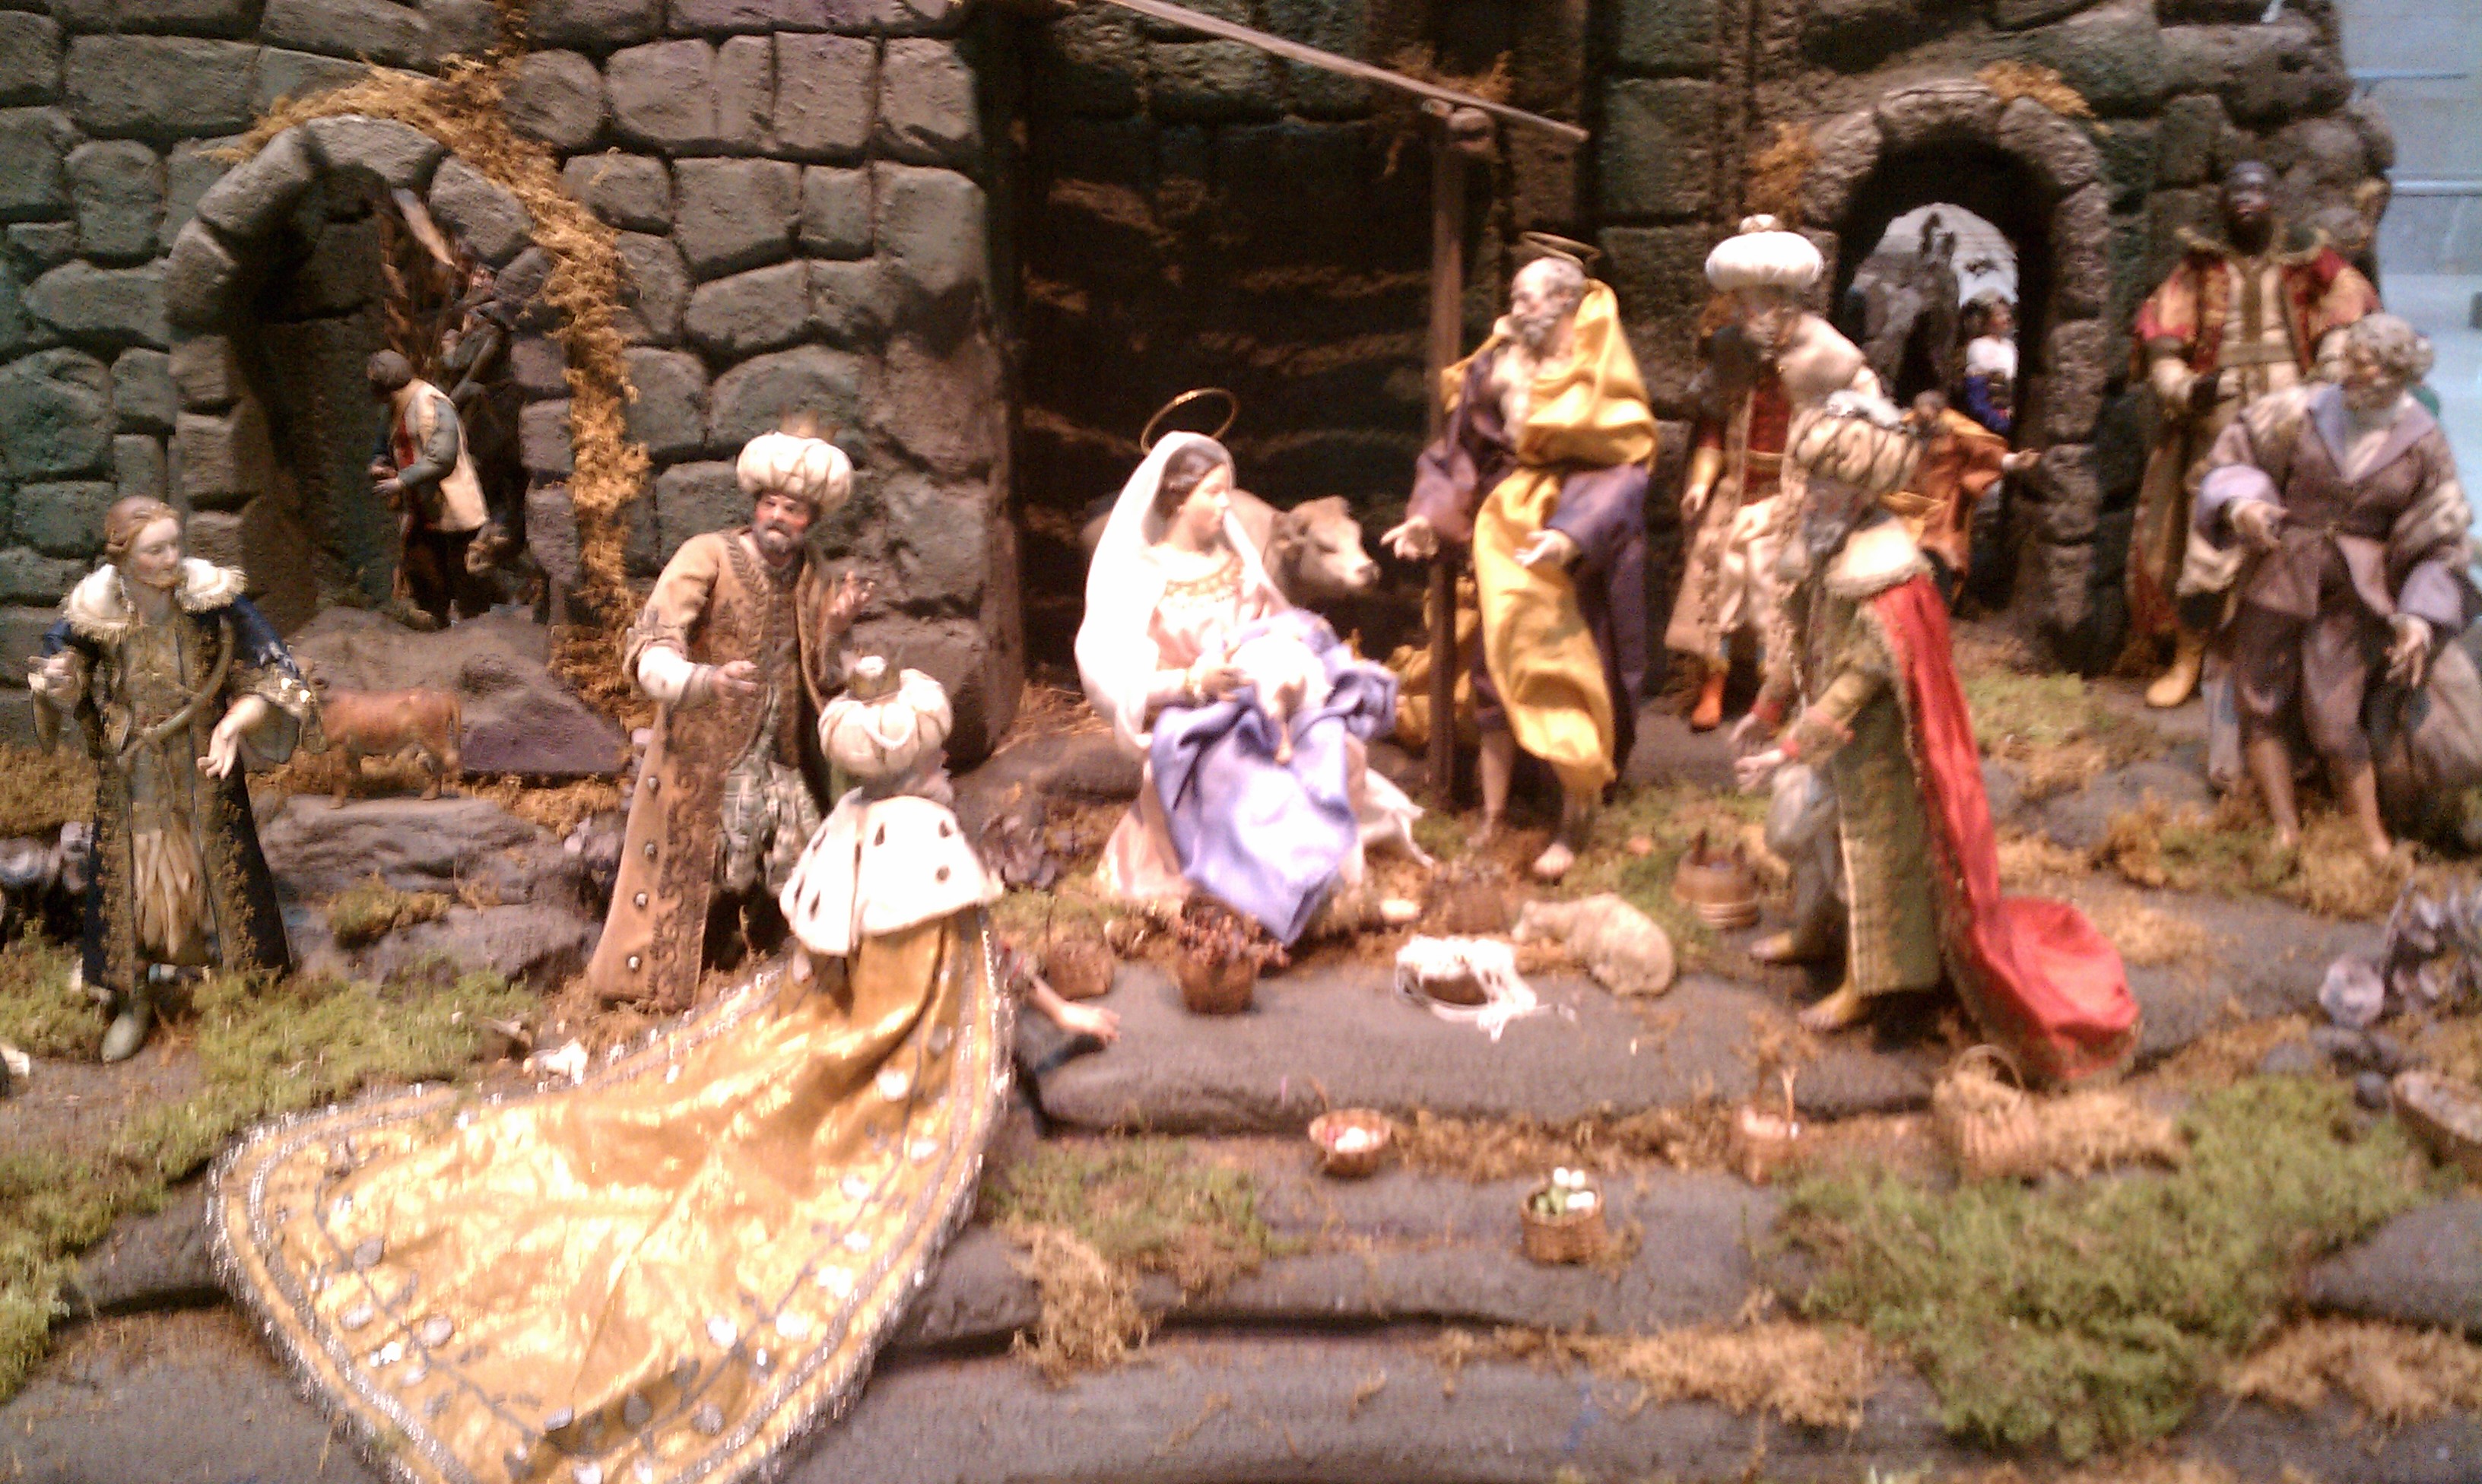 Neapolitan presepio (manger) figures, displayed at Nelson-Atkins Museum of Art, December 2013